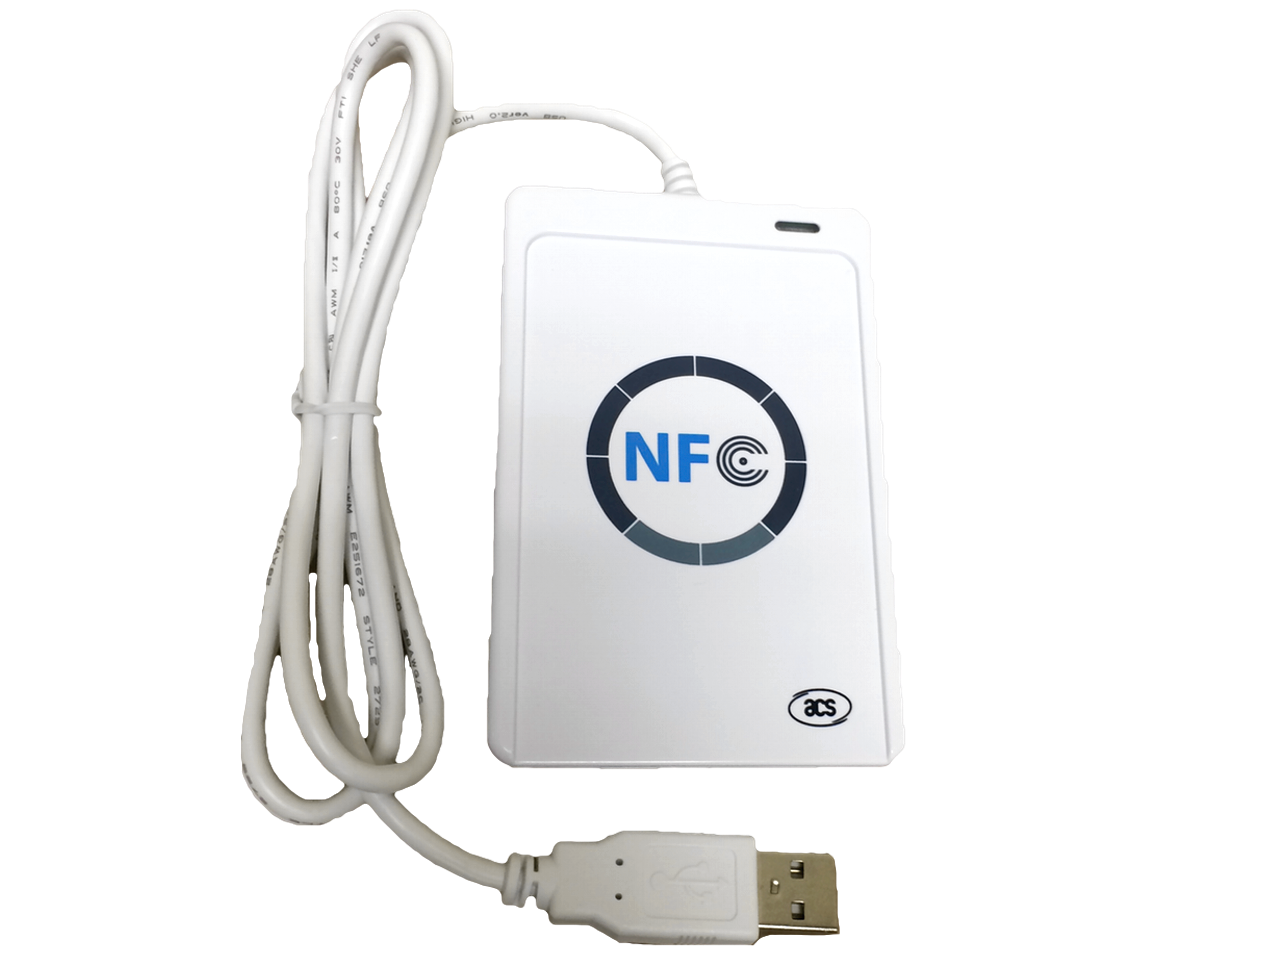 Free SDK Software RFID ACR 122U Access Control USB Interface NFC Smart card Reader/Writer